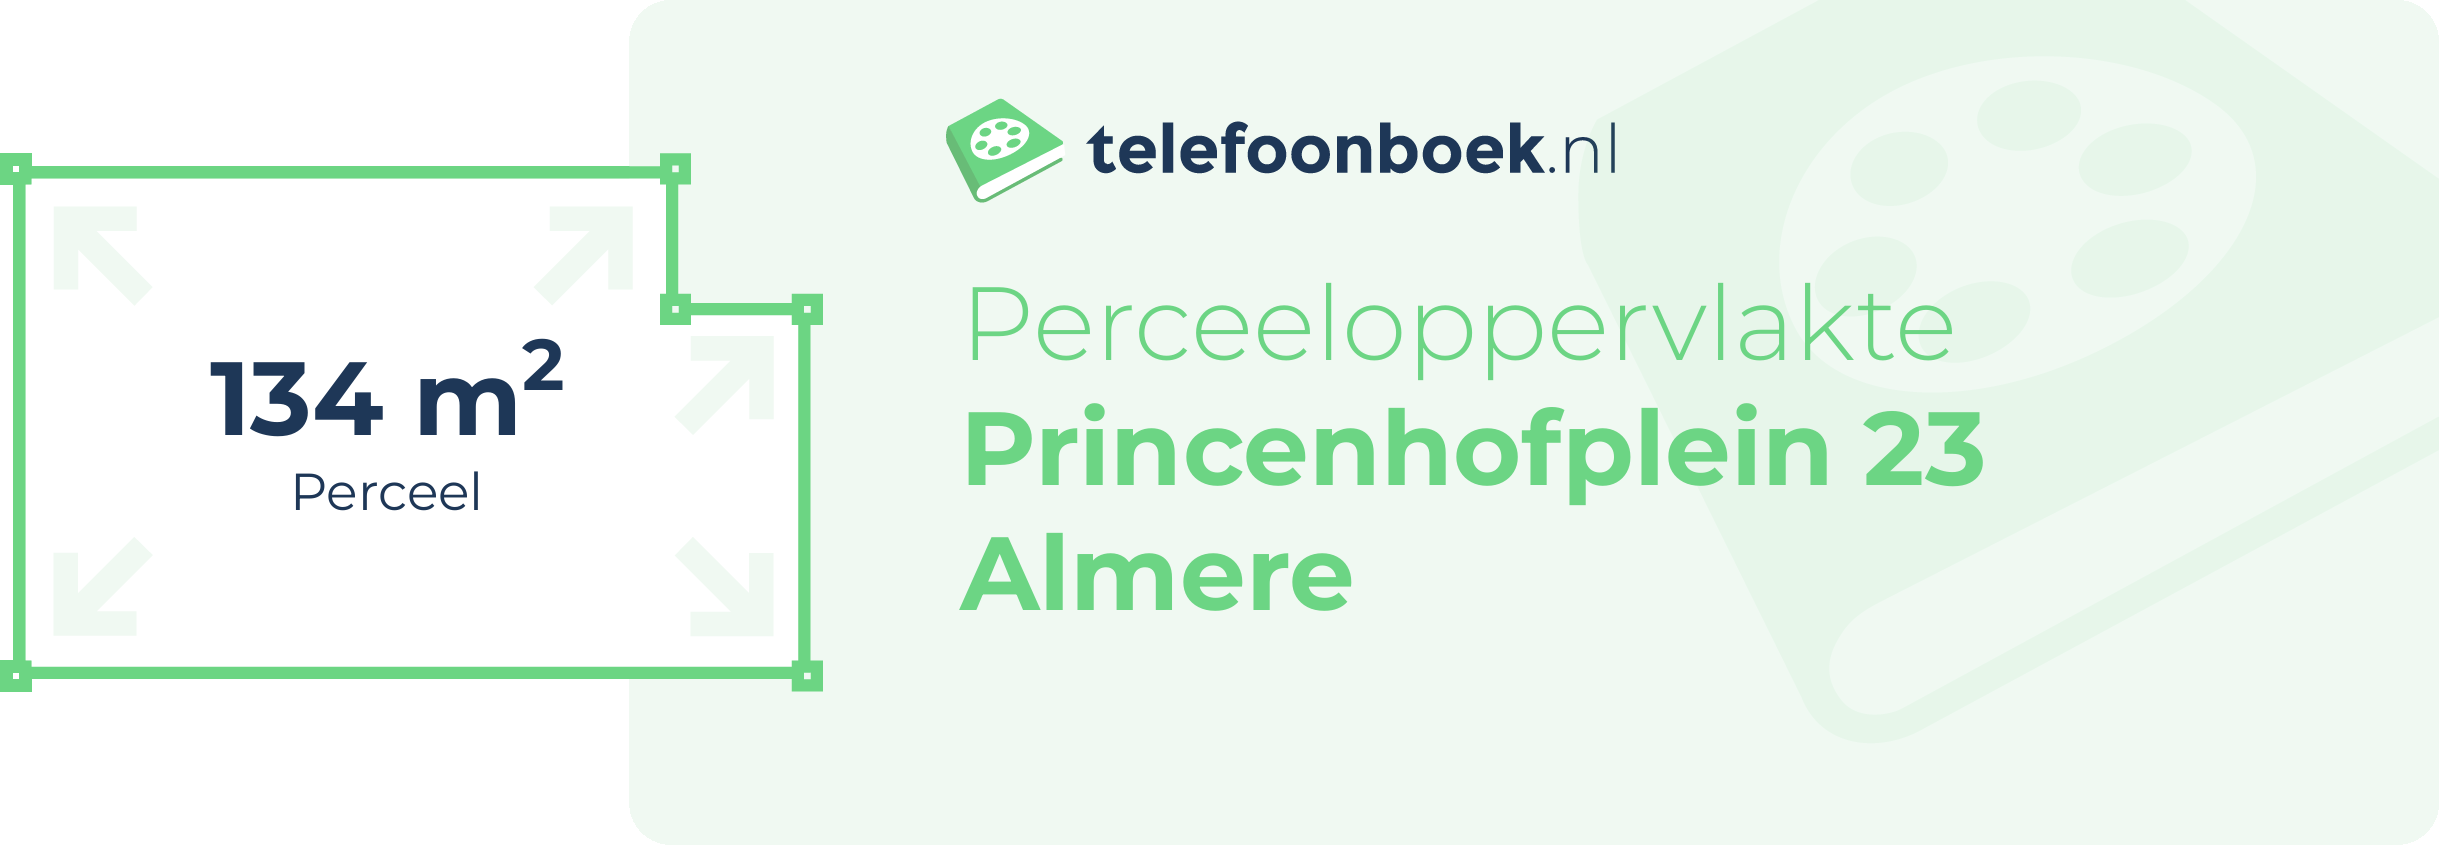 Perceeloppervlakte Princenhofplein 23 Almere